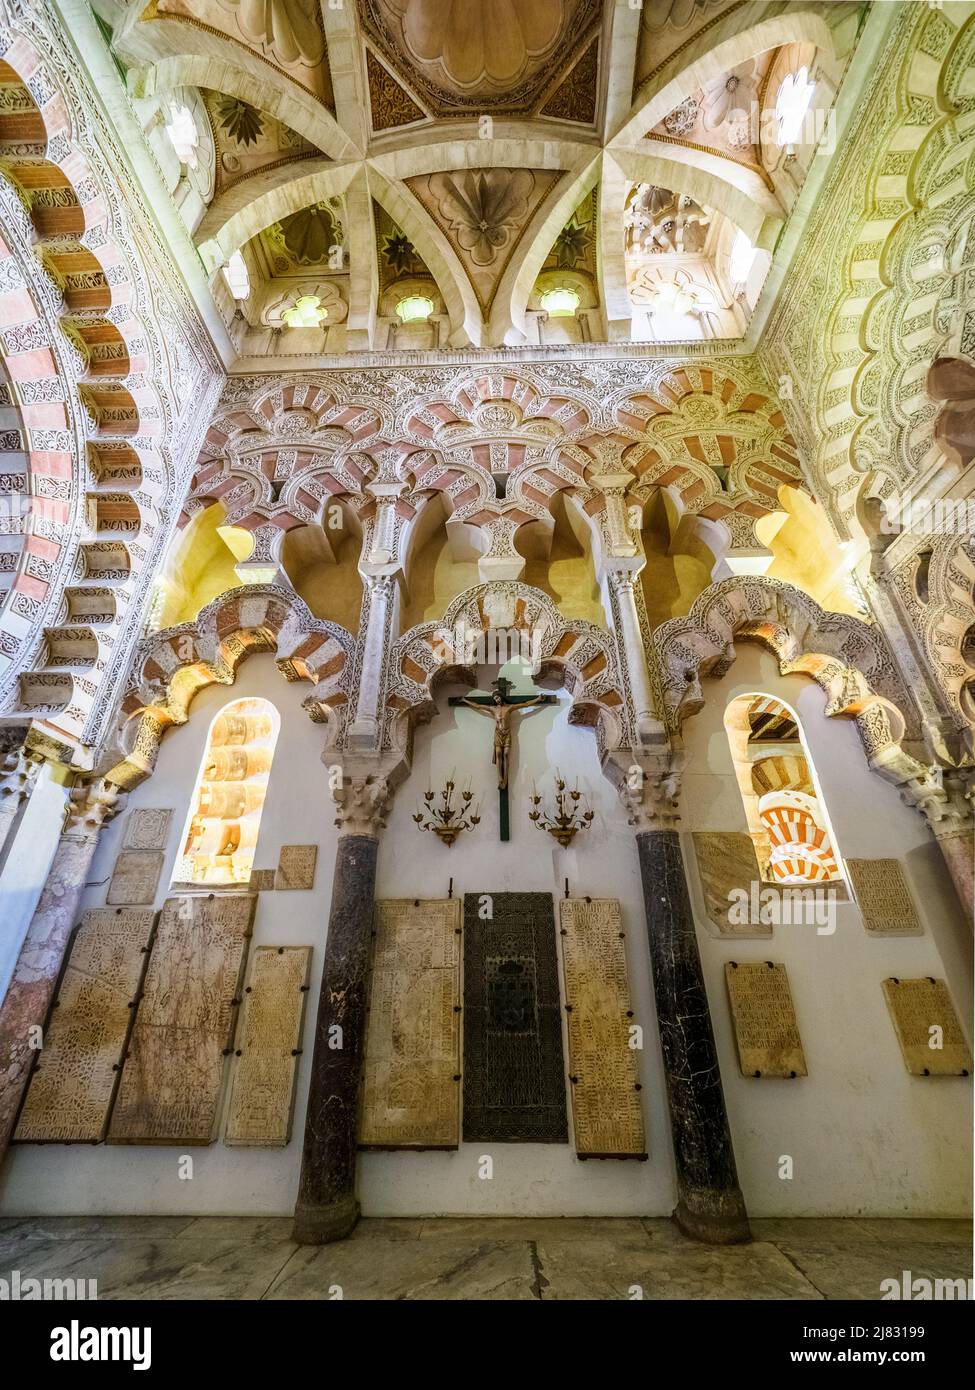 Kapelle von Villaviciosa (Capilla de Villaviciosa) in der Mezquita-Kathedrale (große Moschee von Cordoba) - Cordoba, Spanien Stockfoto